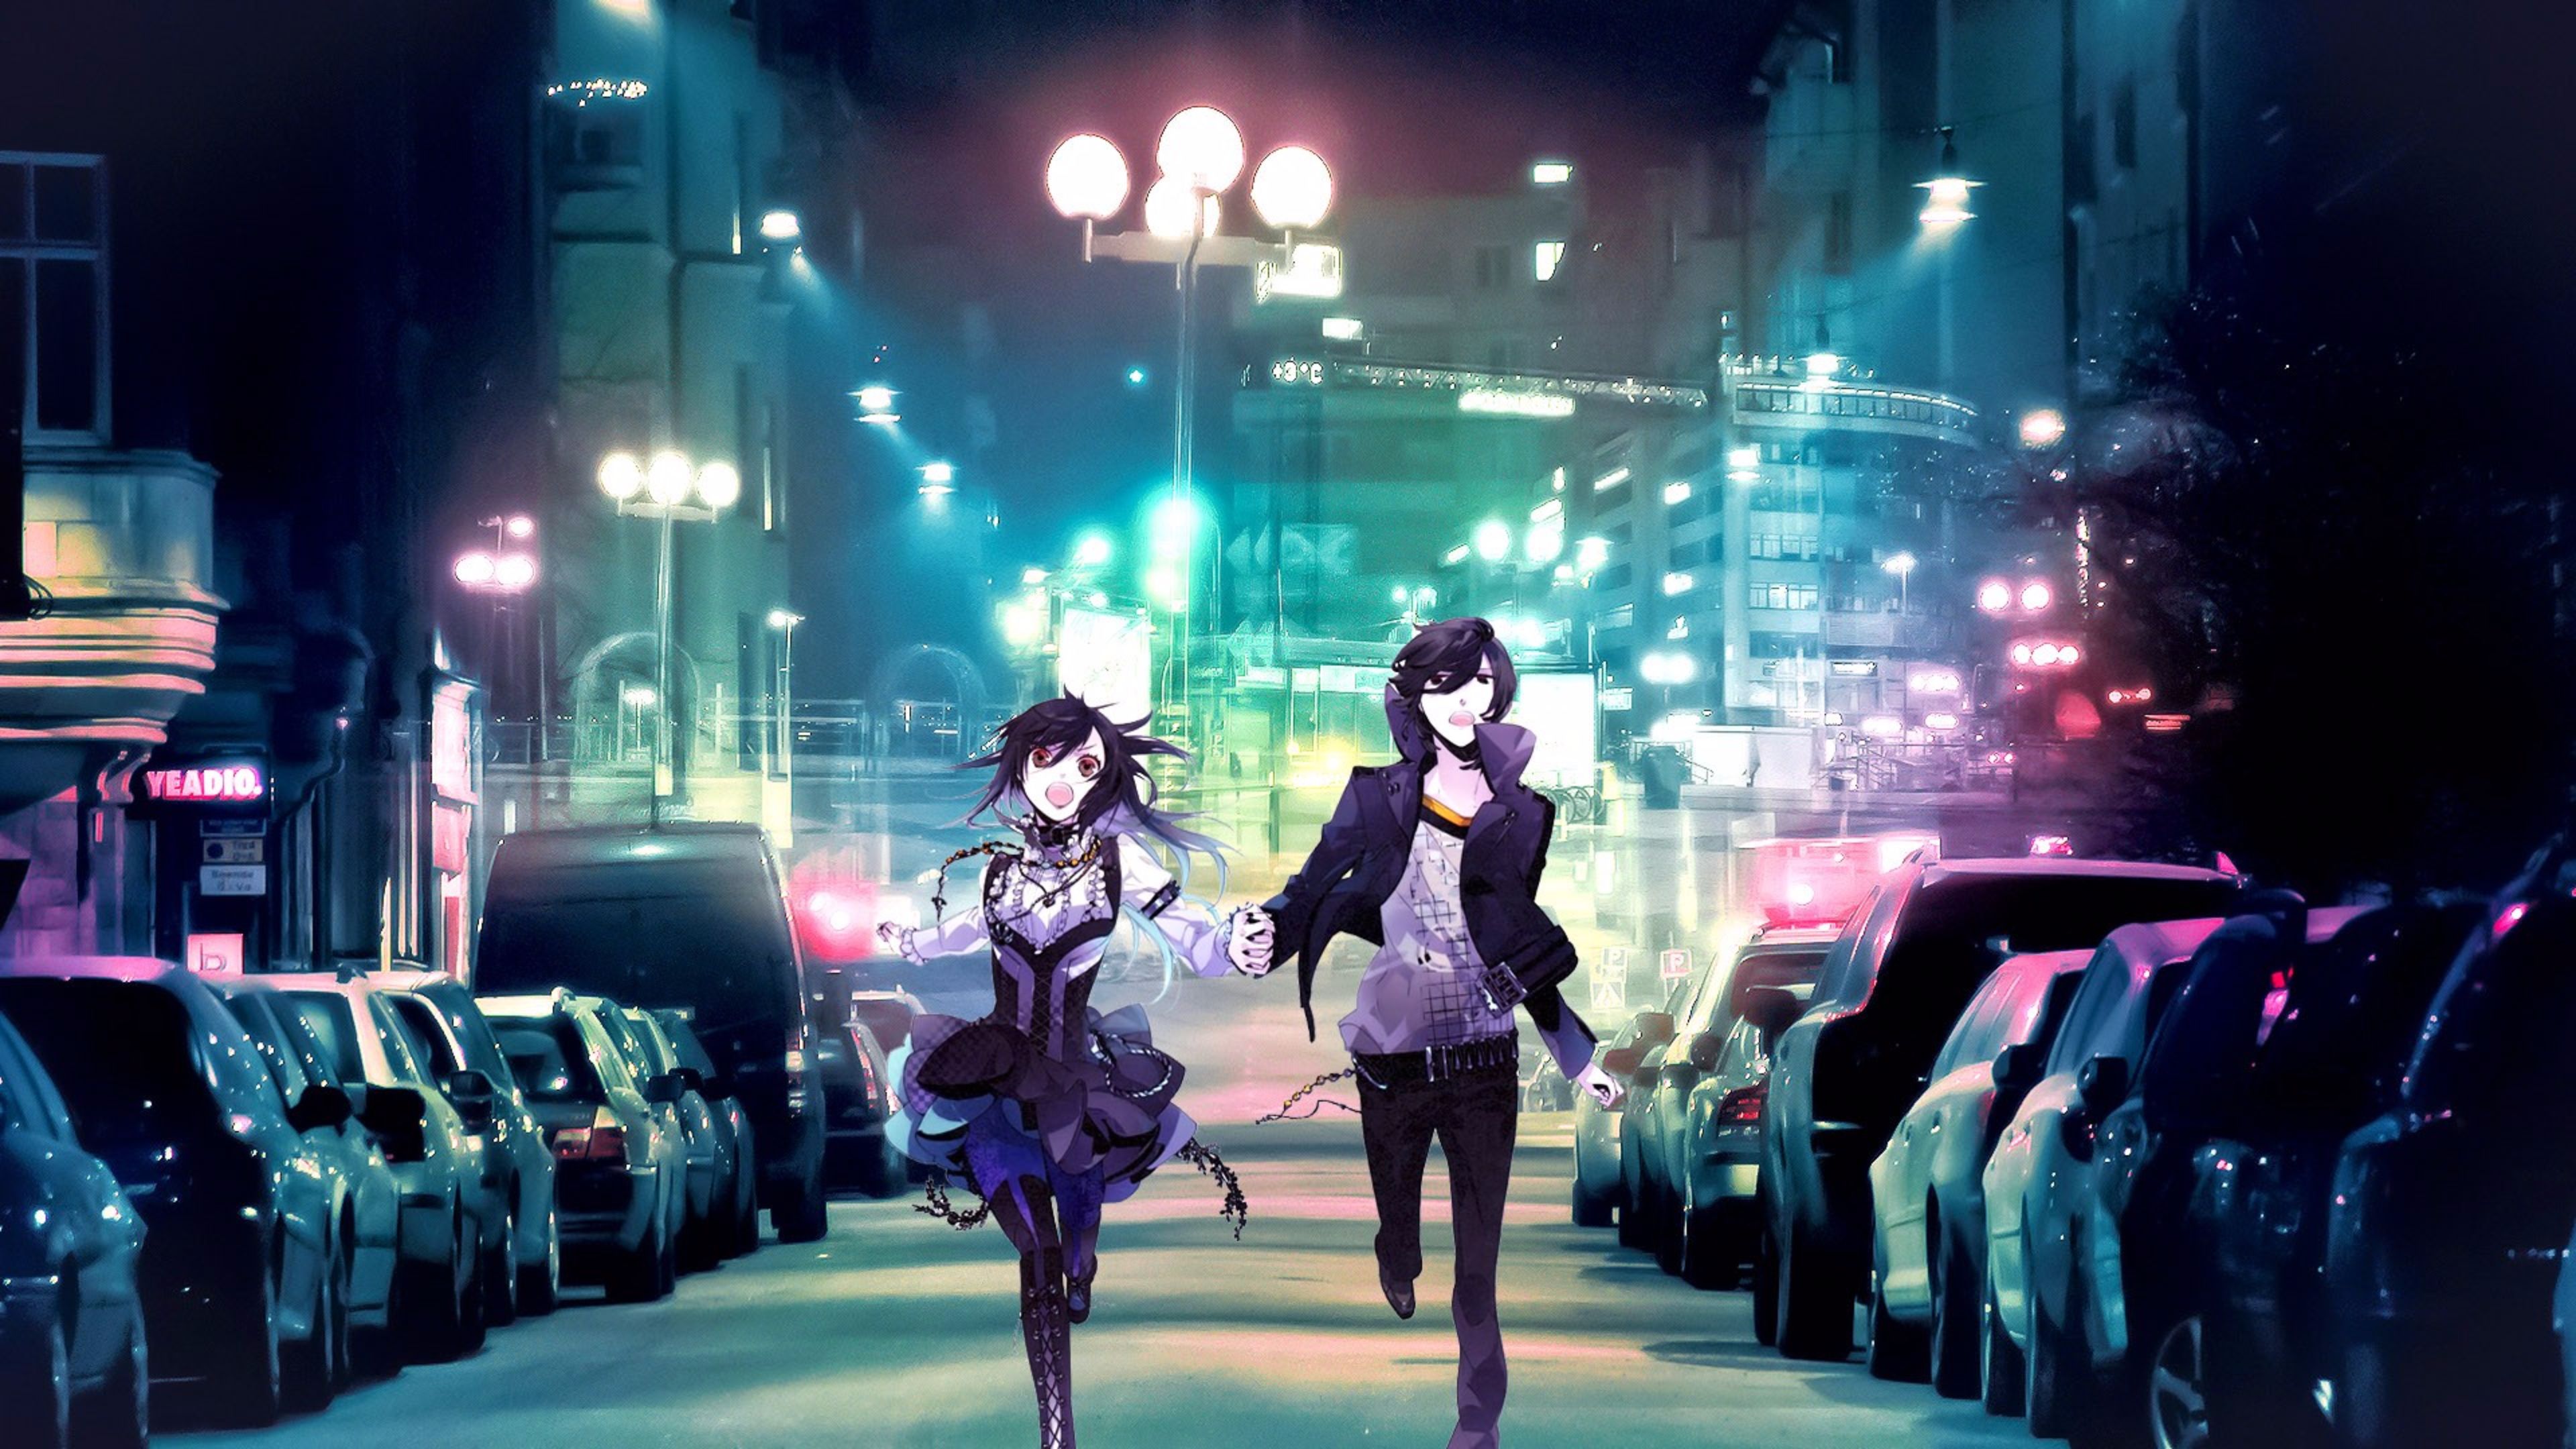 Anime Street Images - Free Download on Freepik